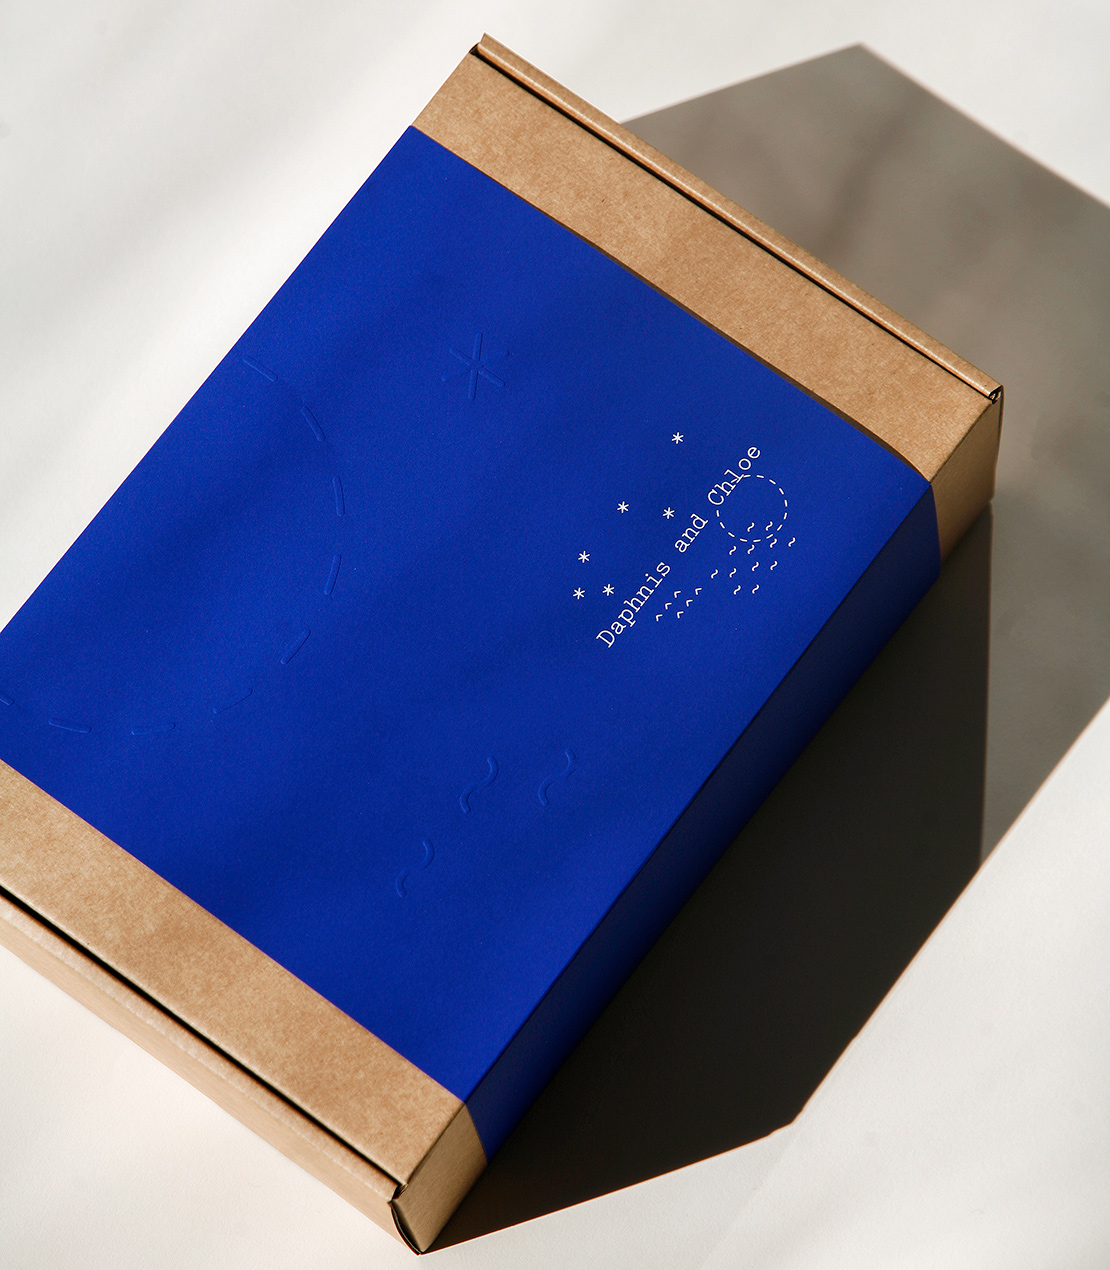 daphnis and chloe gift box